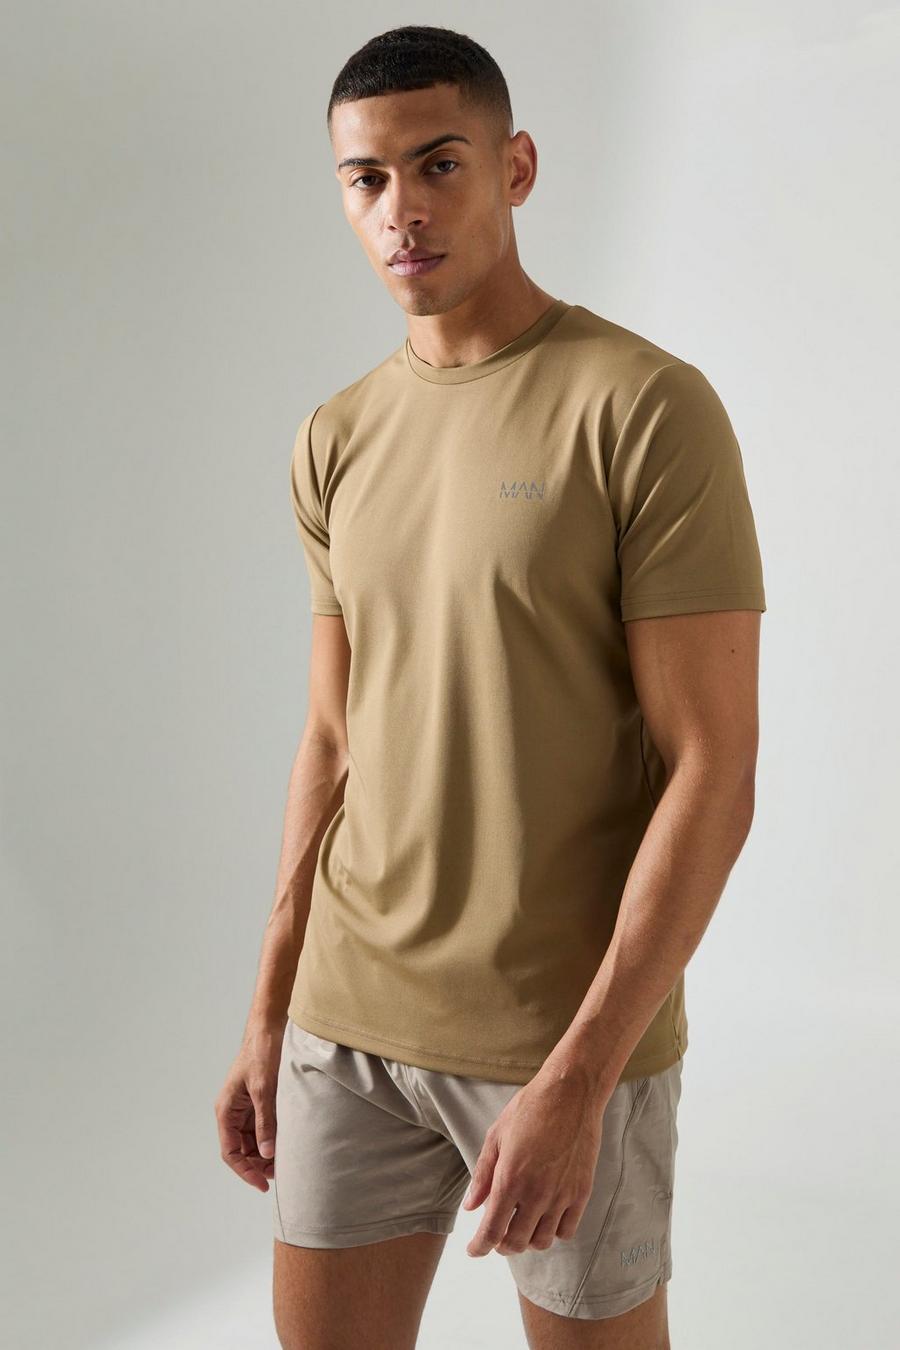 Man Active Performance Sport T-Shirt, Khaki